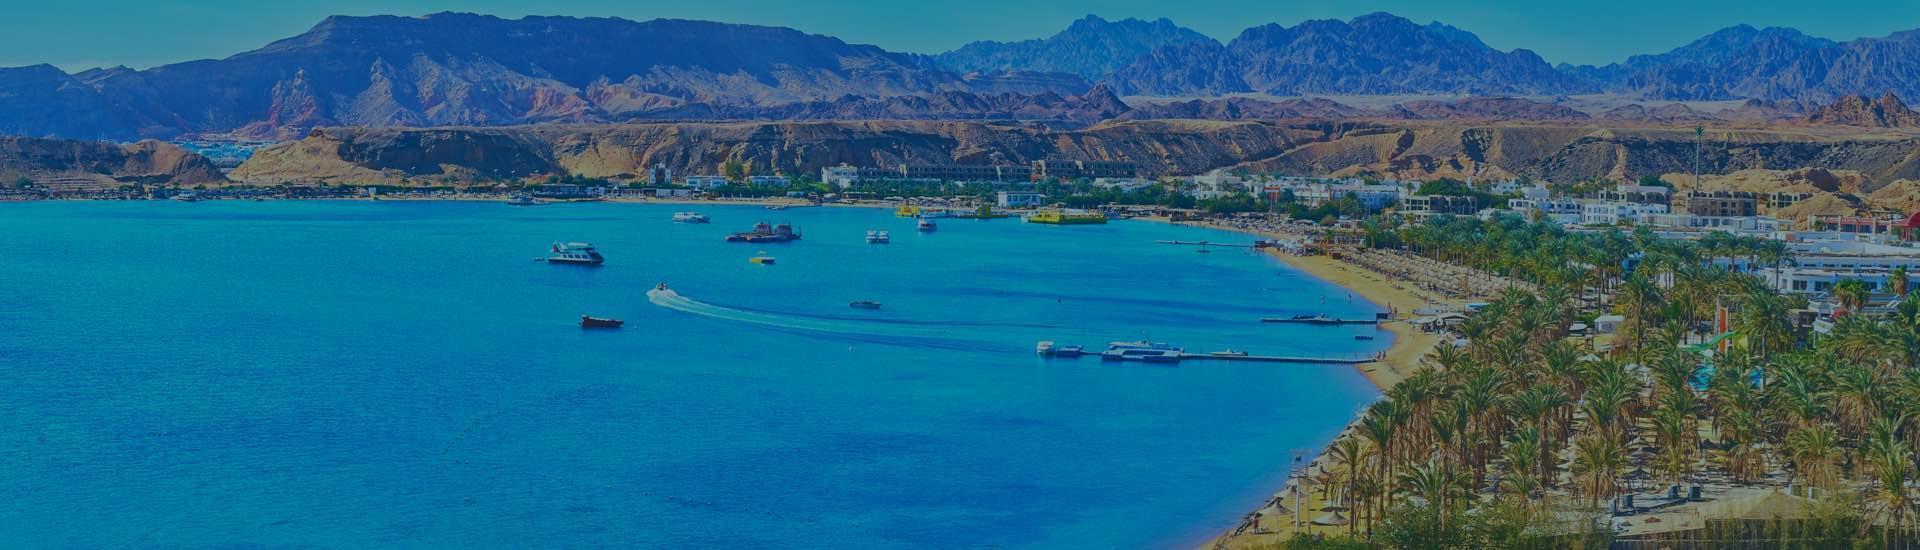 Book Bisha to Sharm El Sheikh Flights